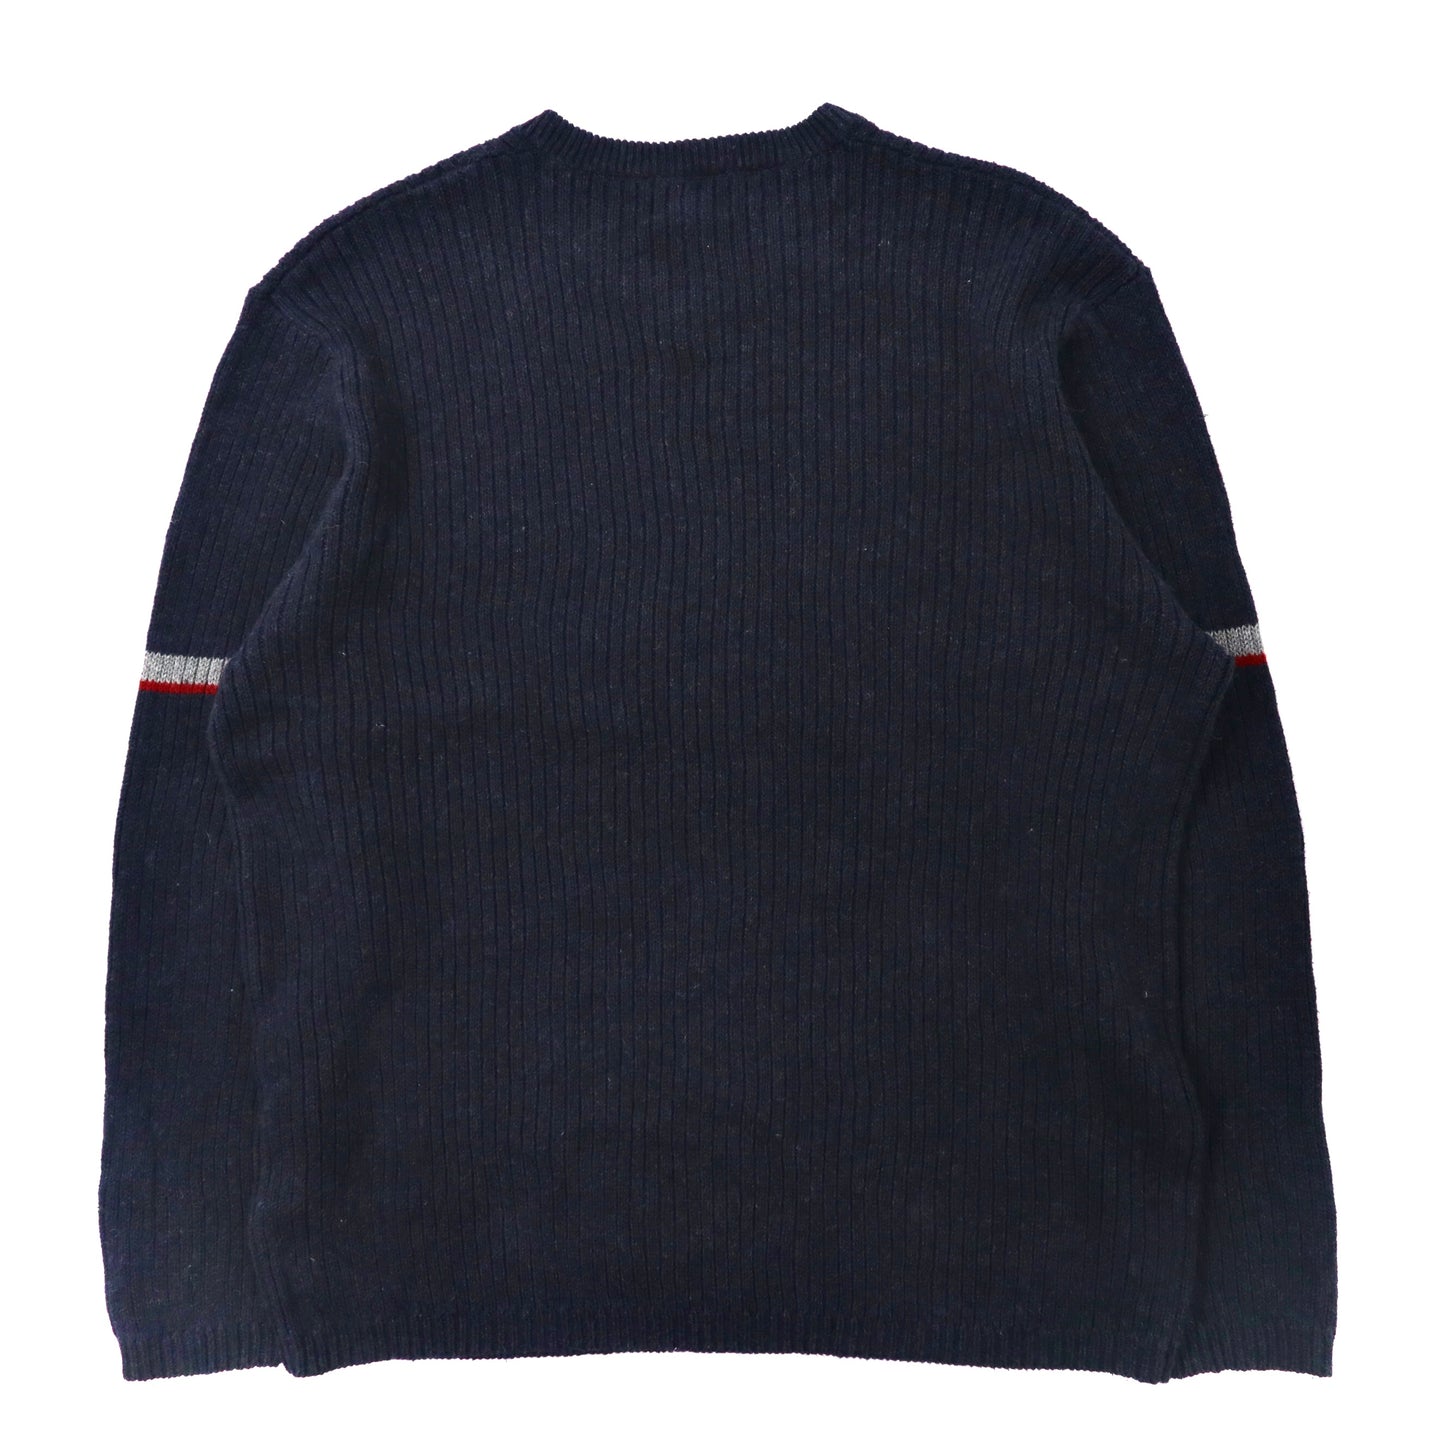 90s Rib Knit V-neck Sweater Vネック リブニット セーター XL ネイビー コットン ビッグサイズ CHEROKEE 90年代